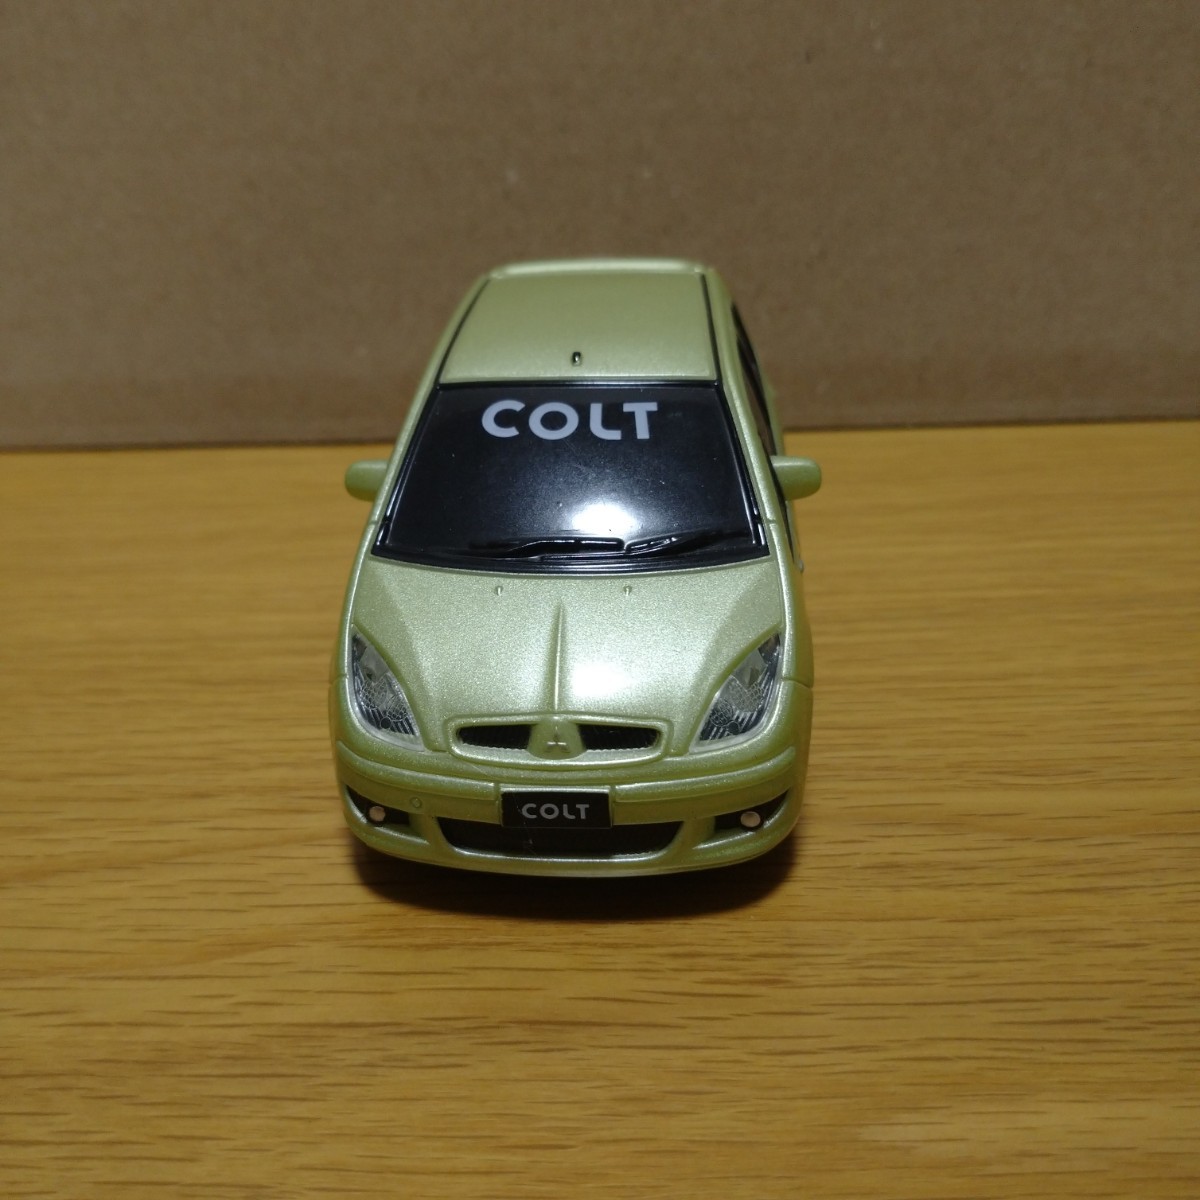 MITSUBISHI MOTORS COLT 三菱 コルト プルバックカー プルバック コレクション 非売品 ミニカー minicar limited car collection_画像2